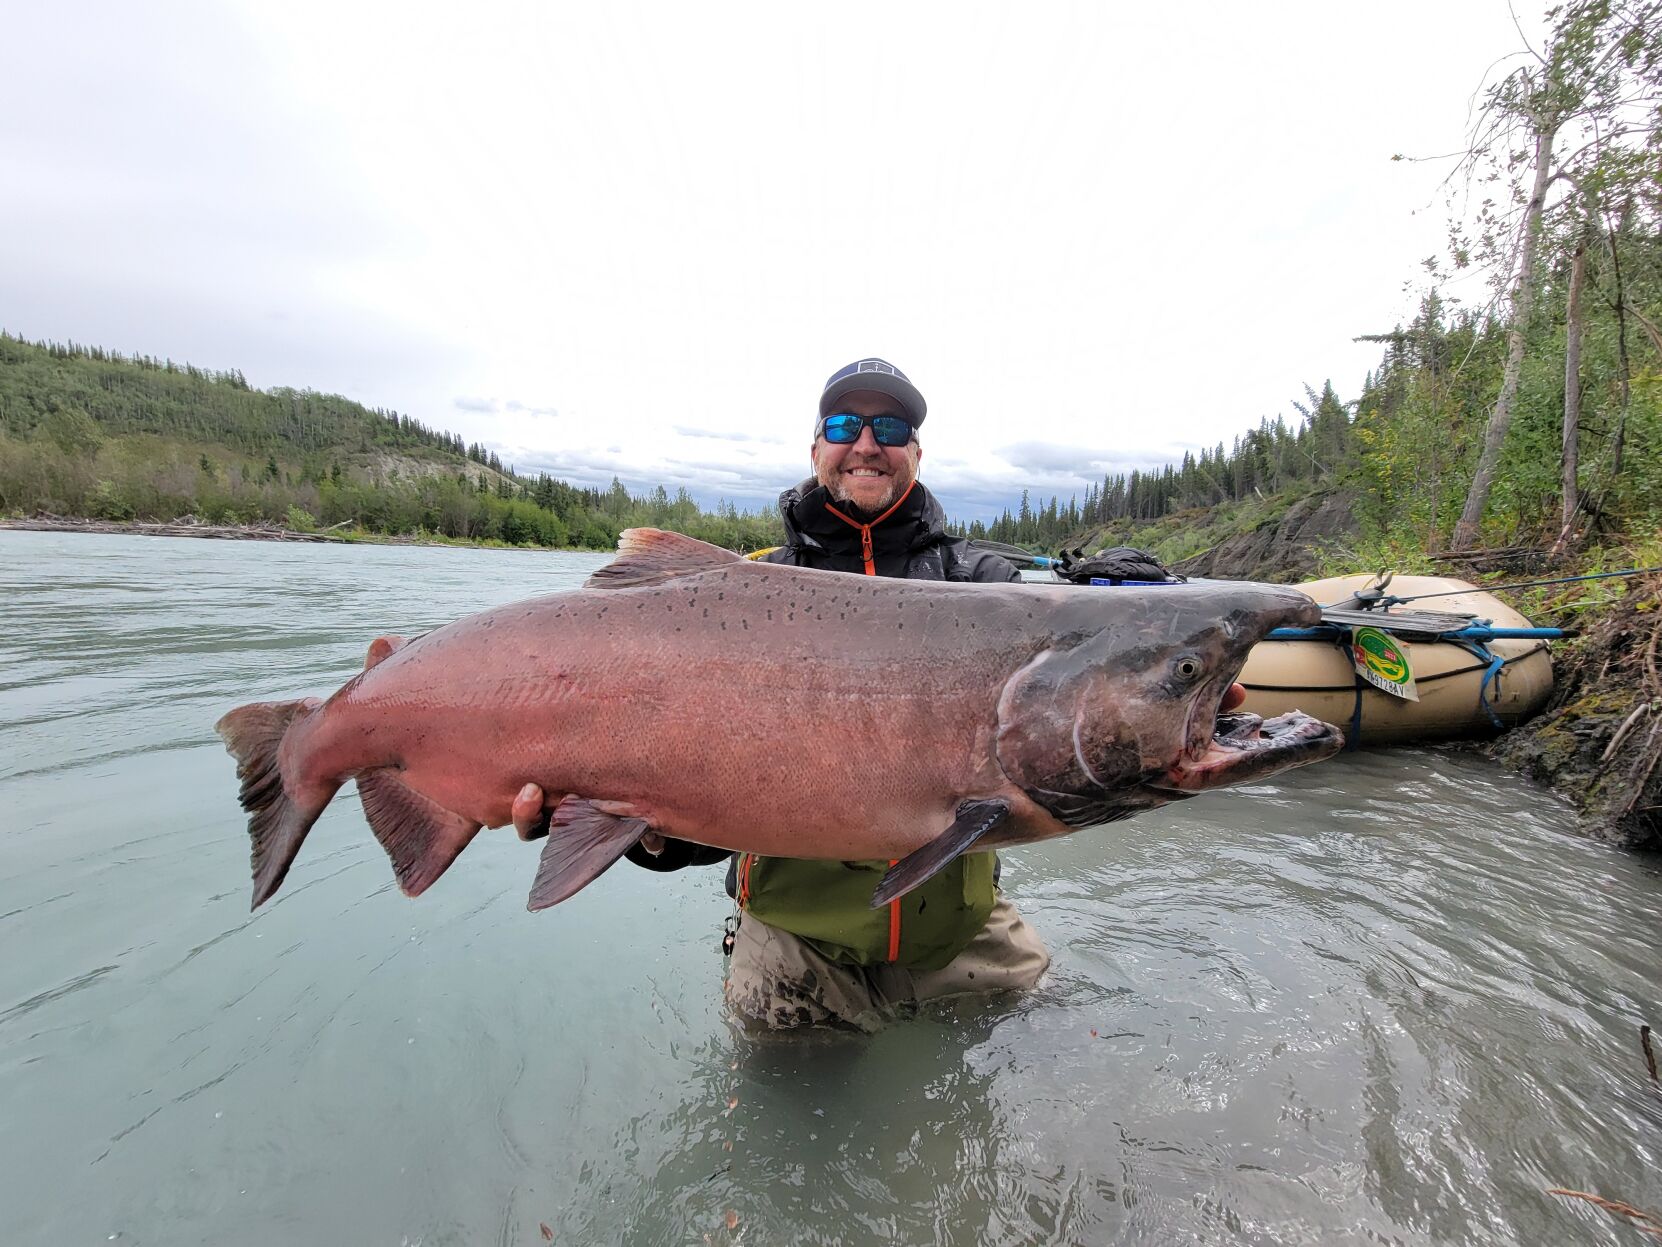 Mackenthun: Alaskan river fishing provides great challenge | Local